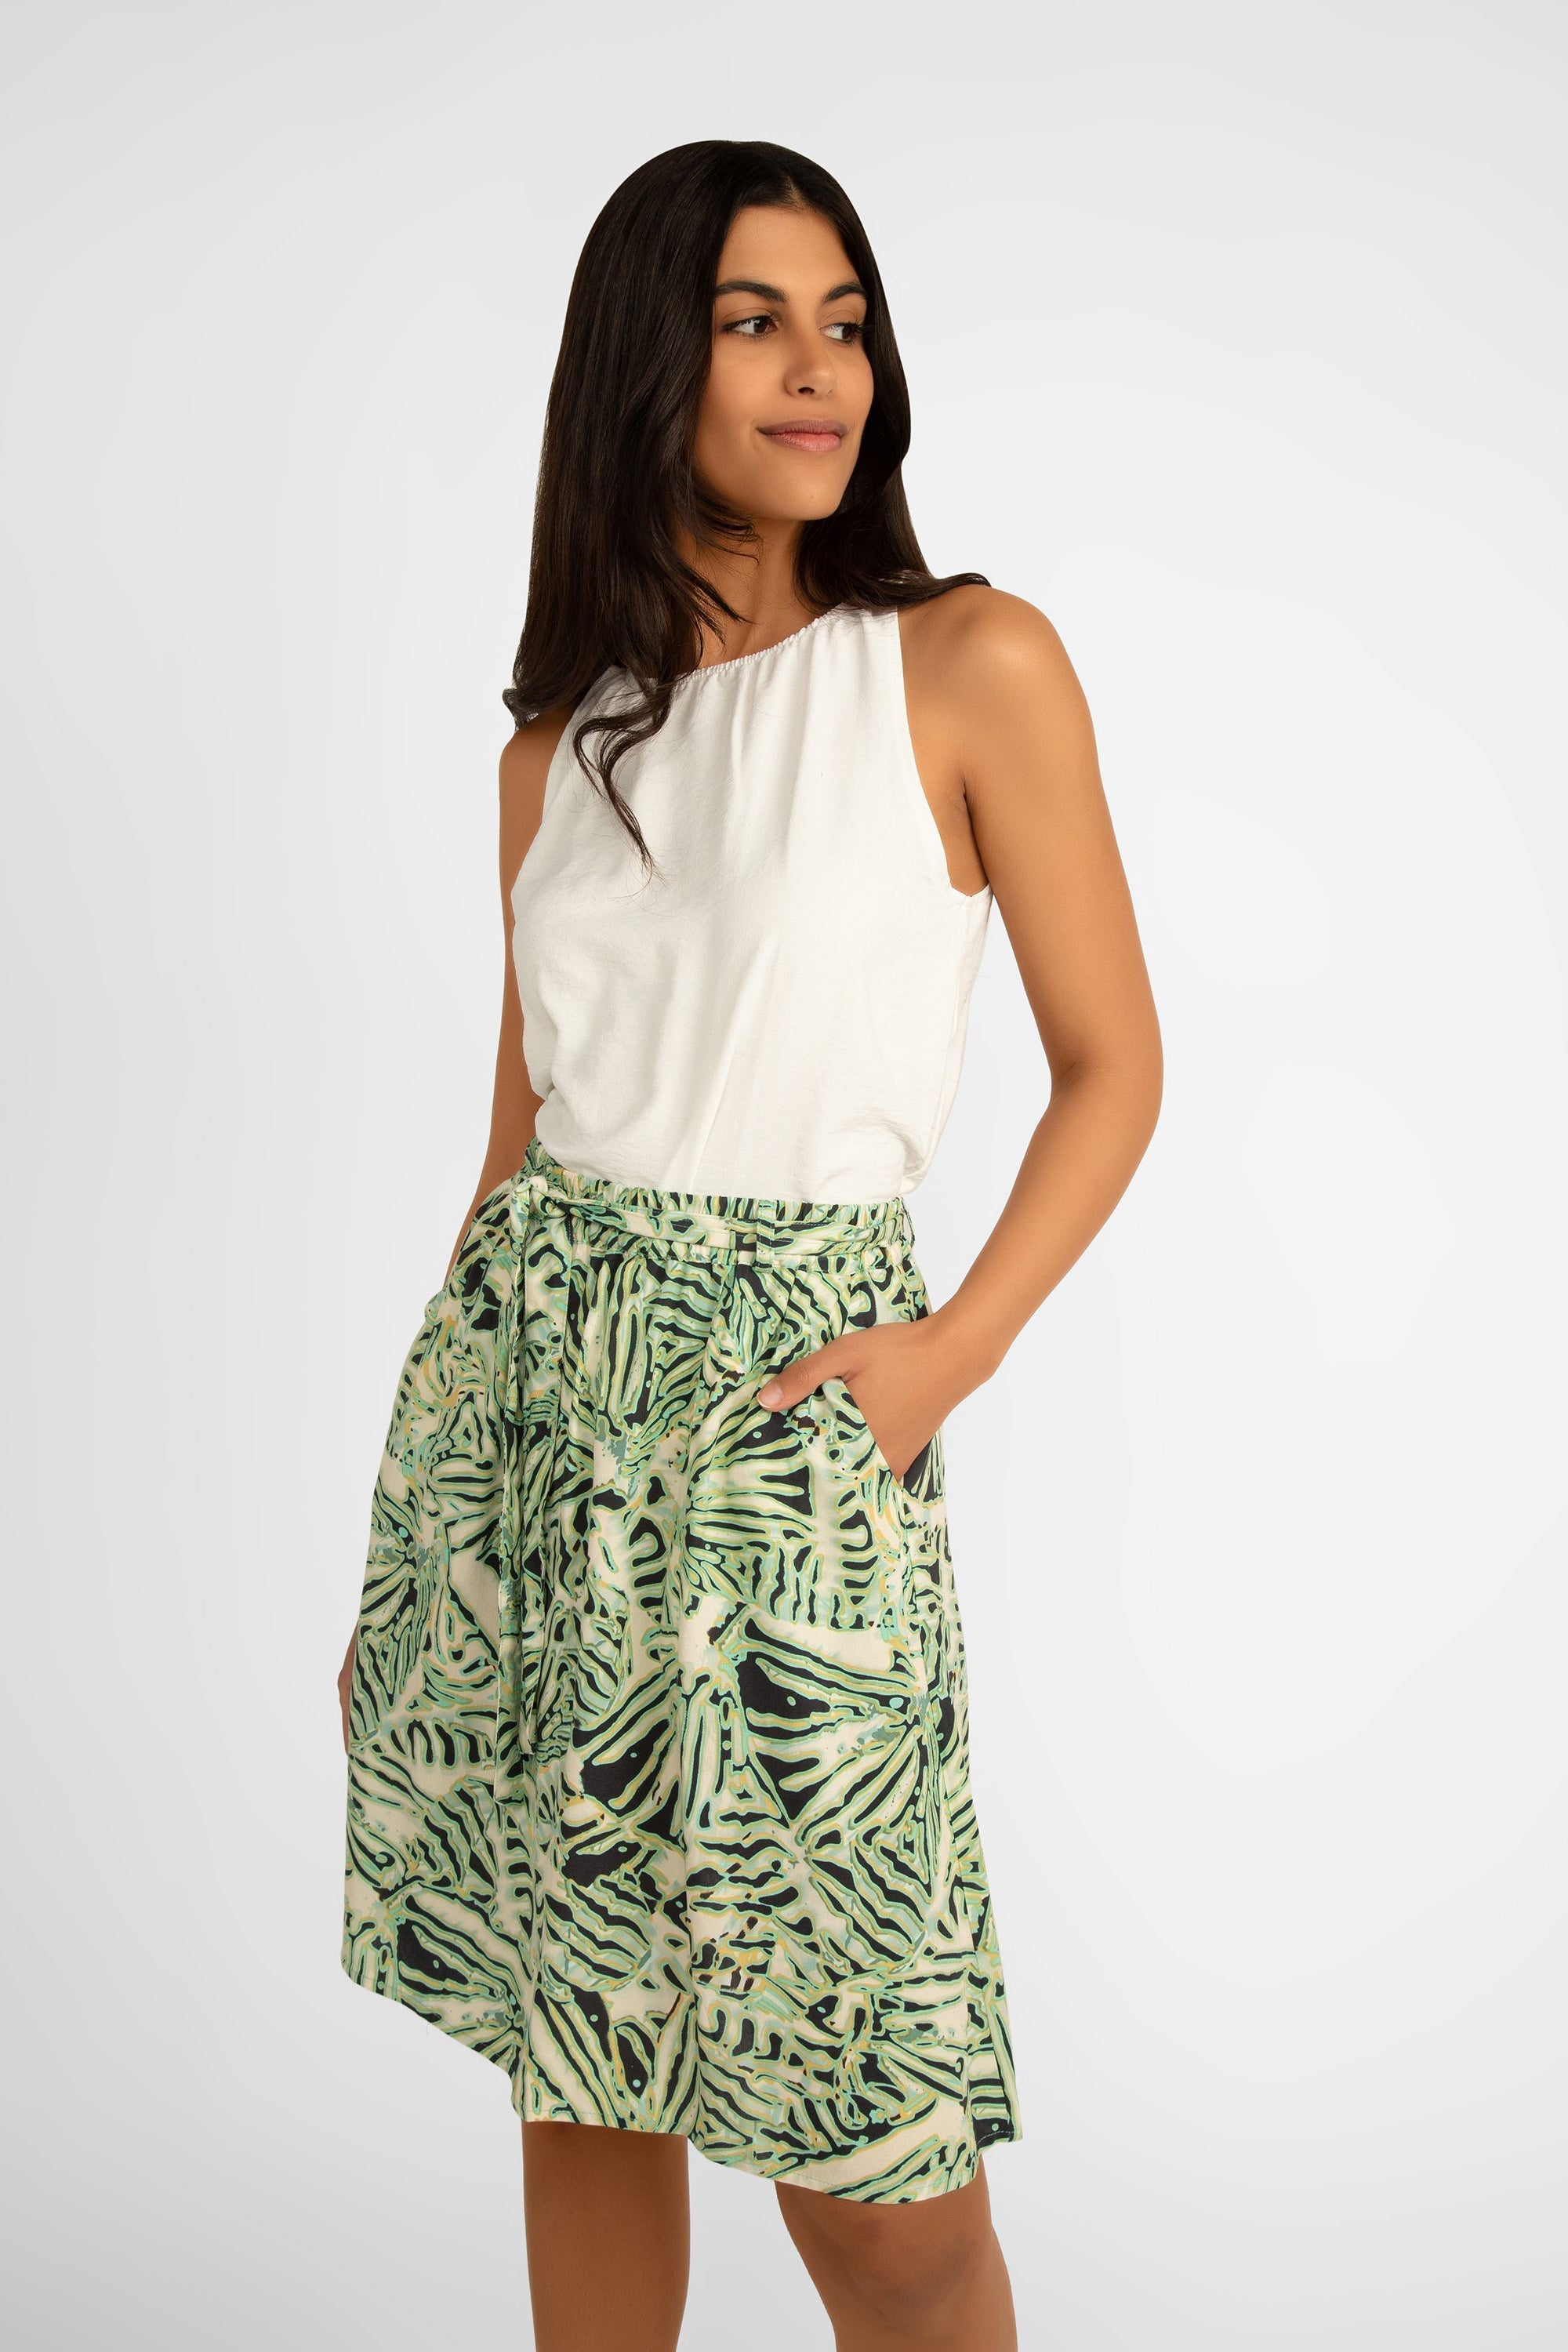 Soya Concept (40628) Aqua Print Knee Length Skirt with Removeable Tie Belt 